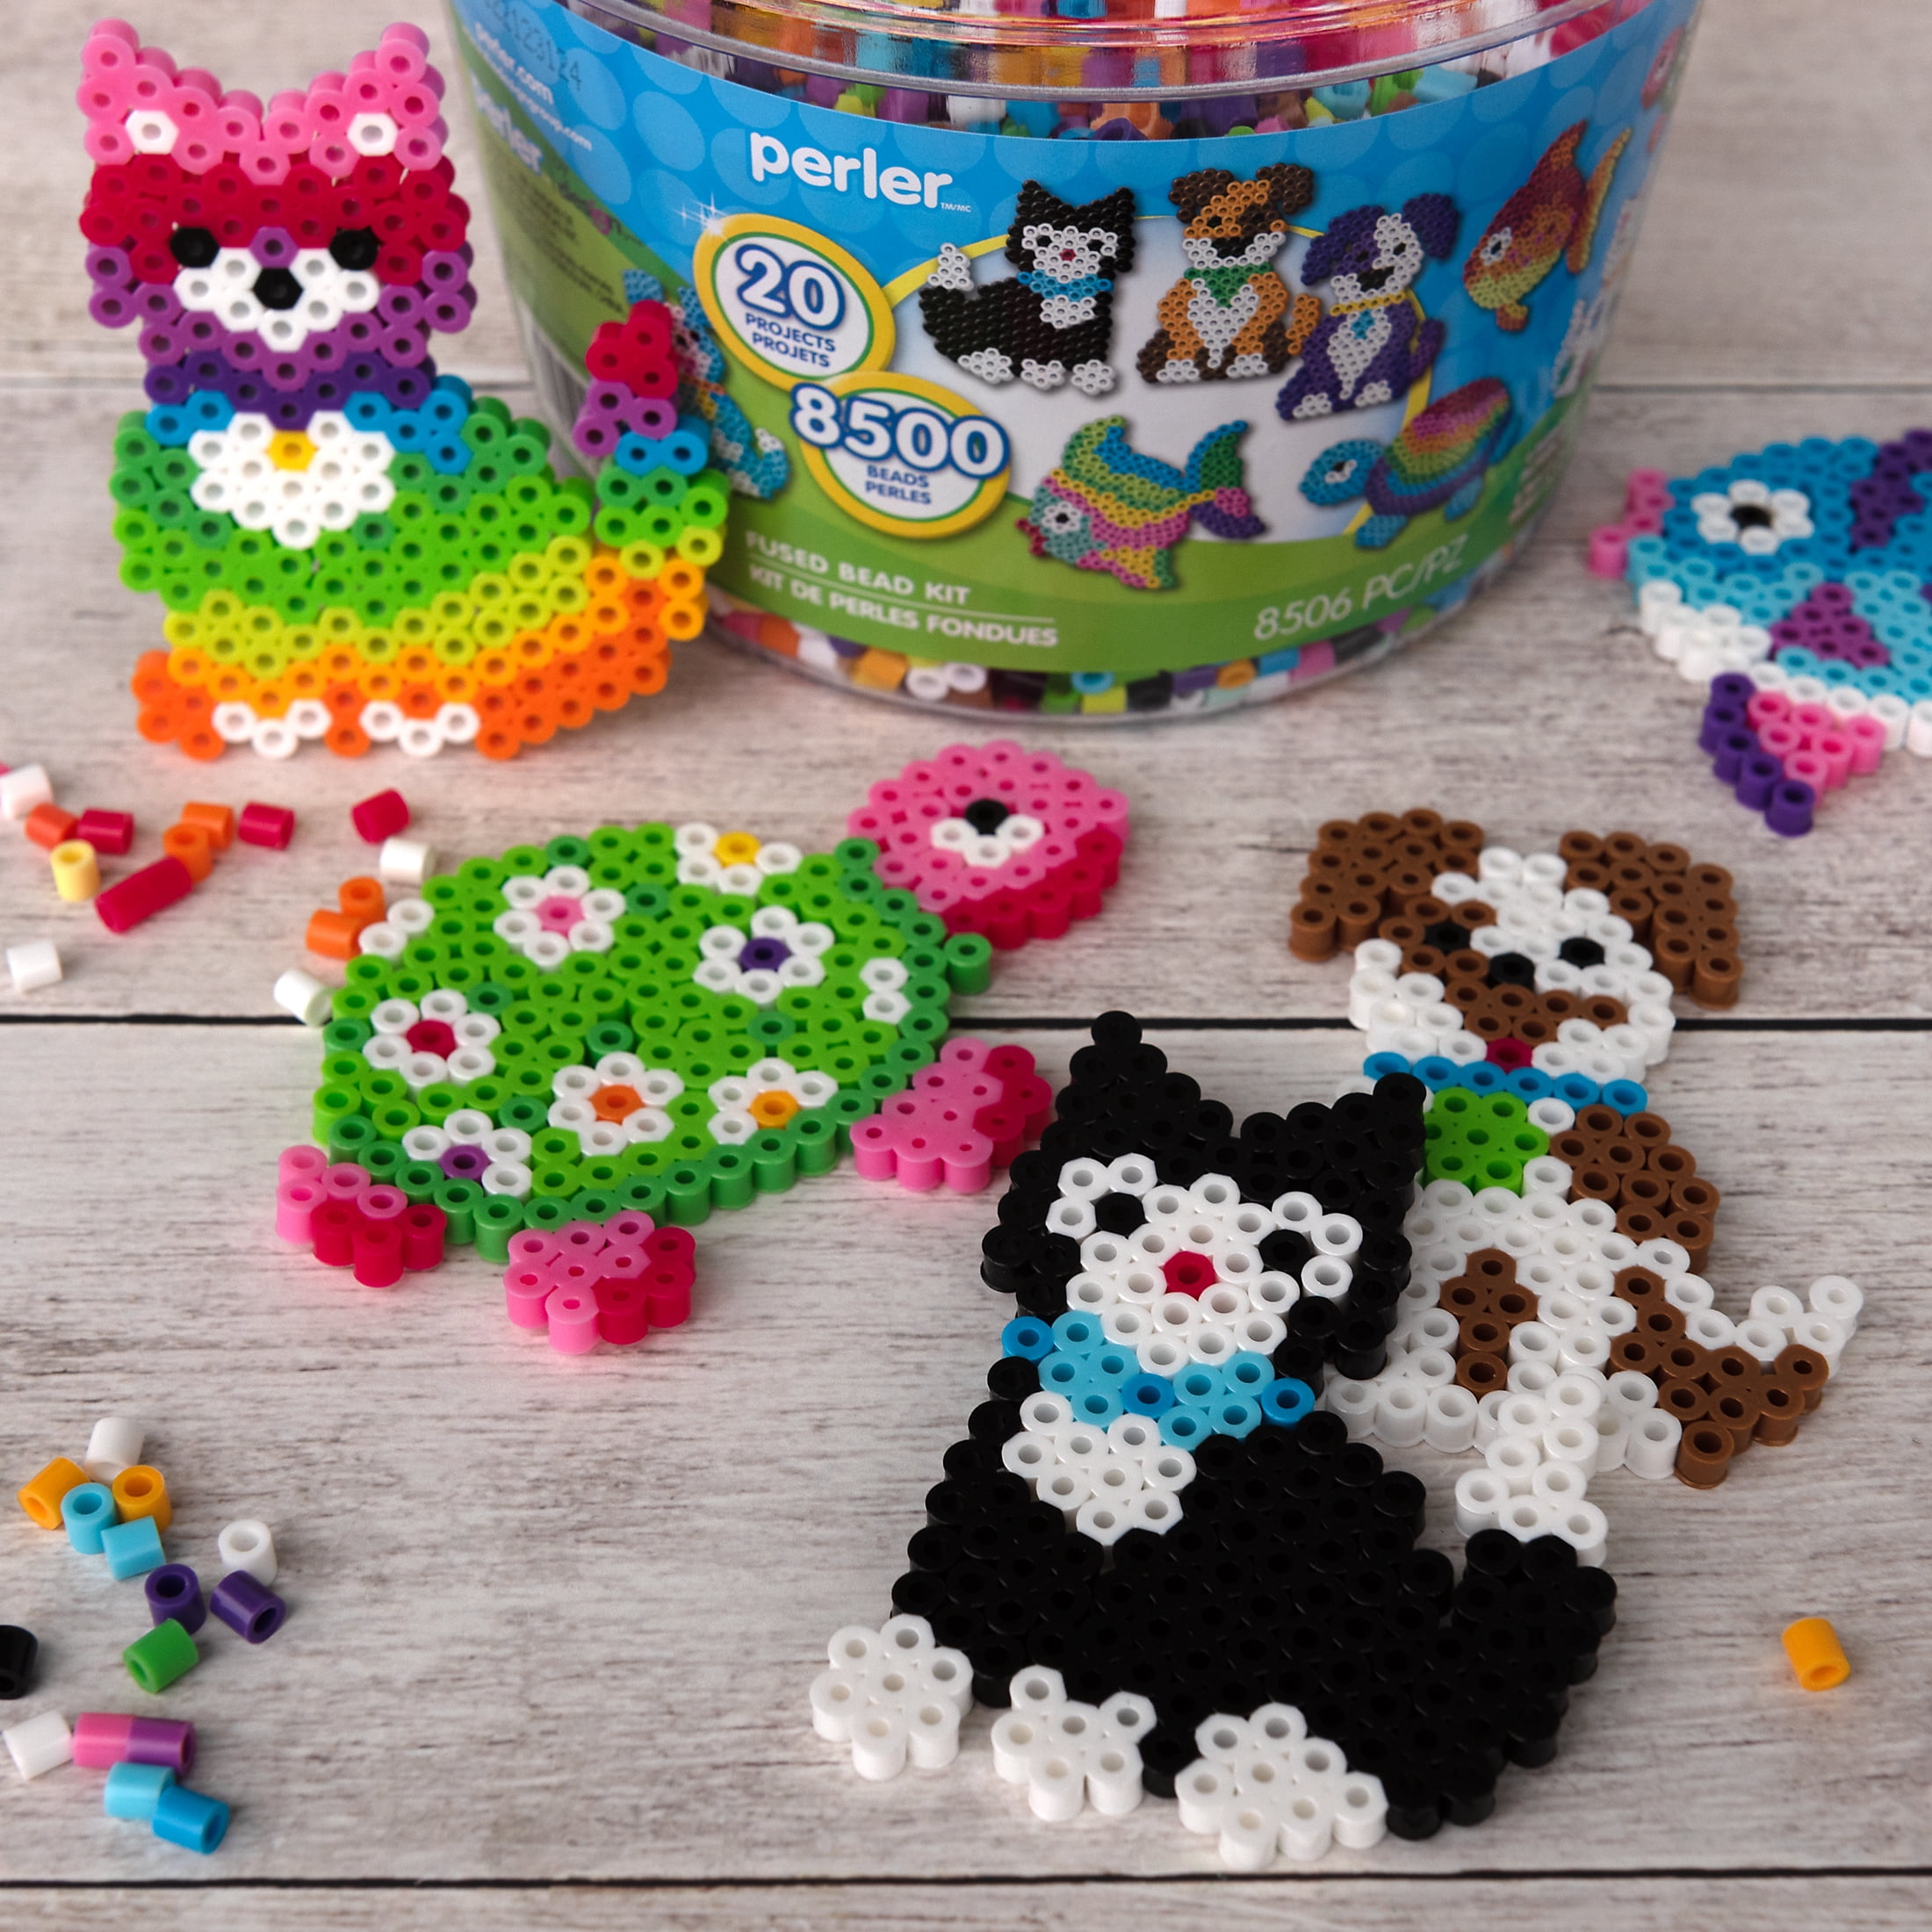 20 Easy Animal Perler Bead Patterns For Kids - DIY Crafts